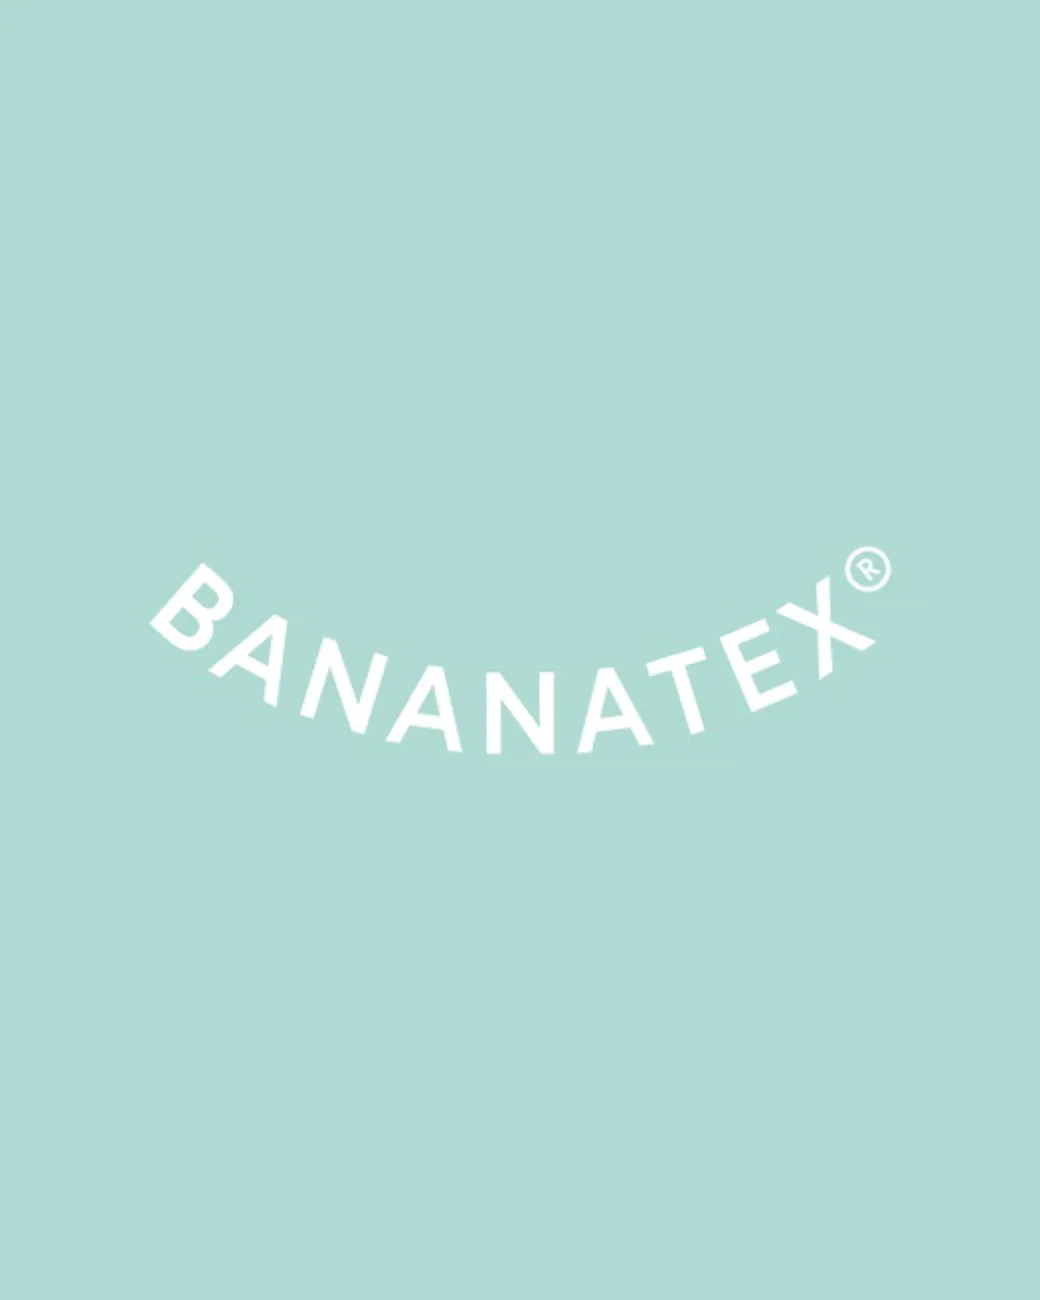 Partner Bananatex